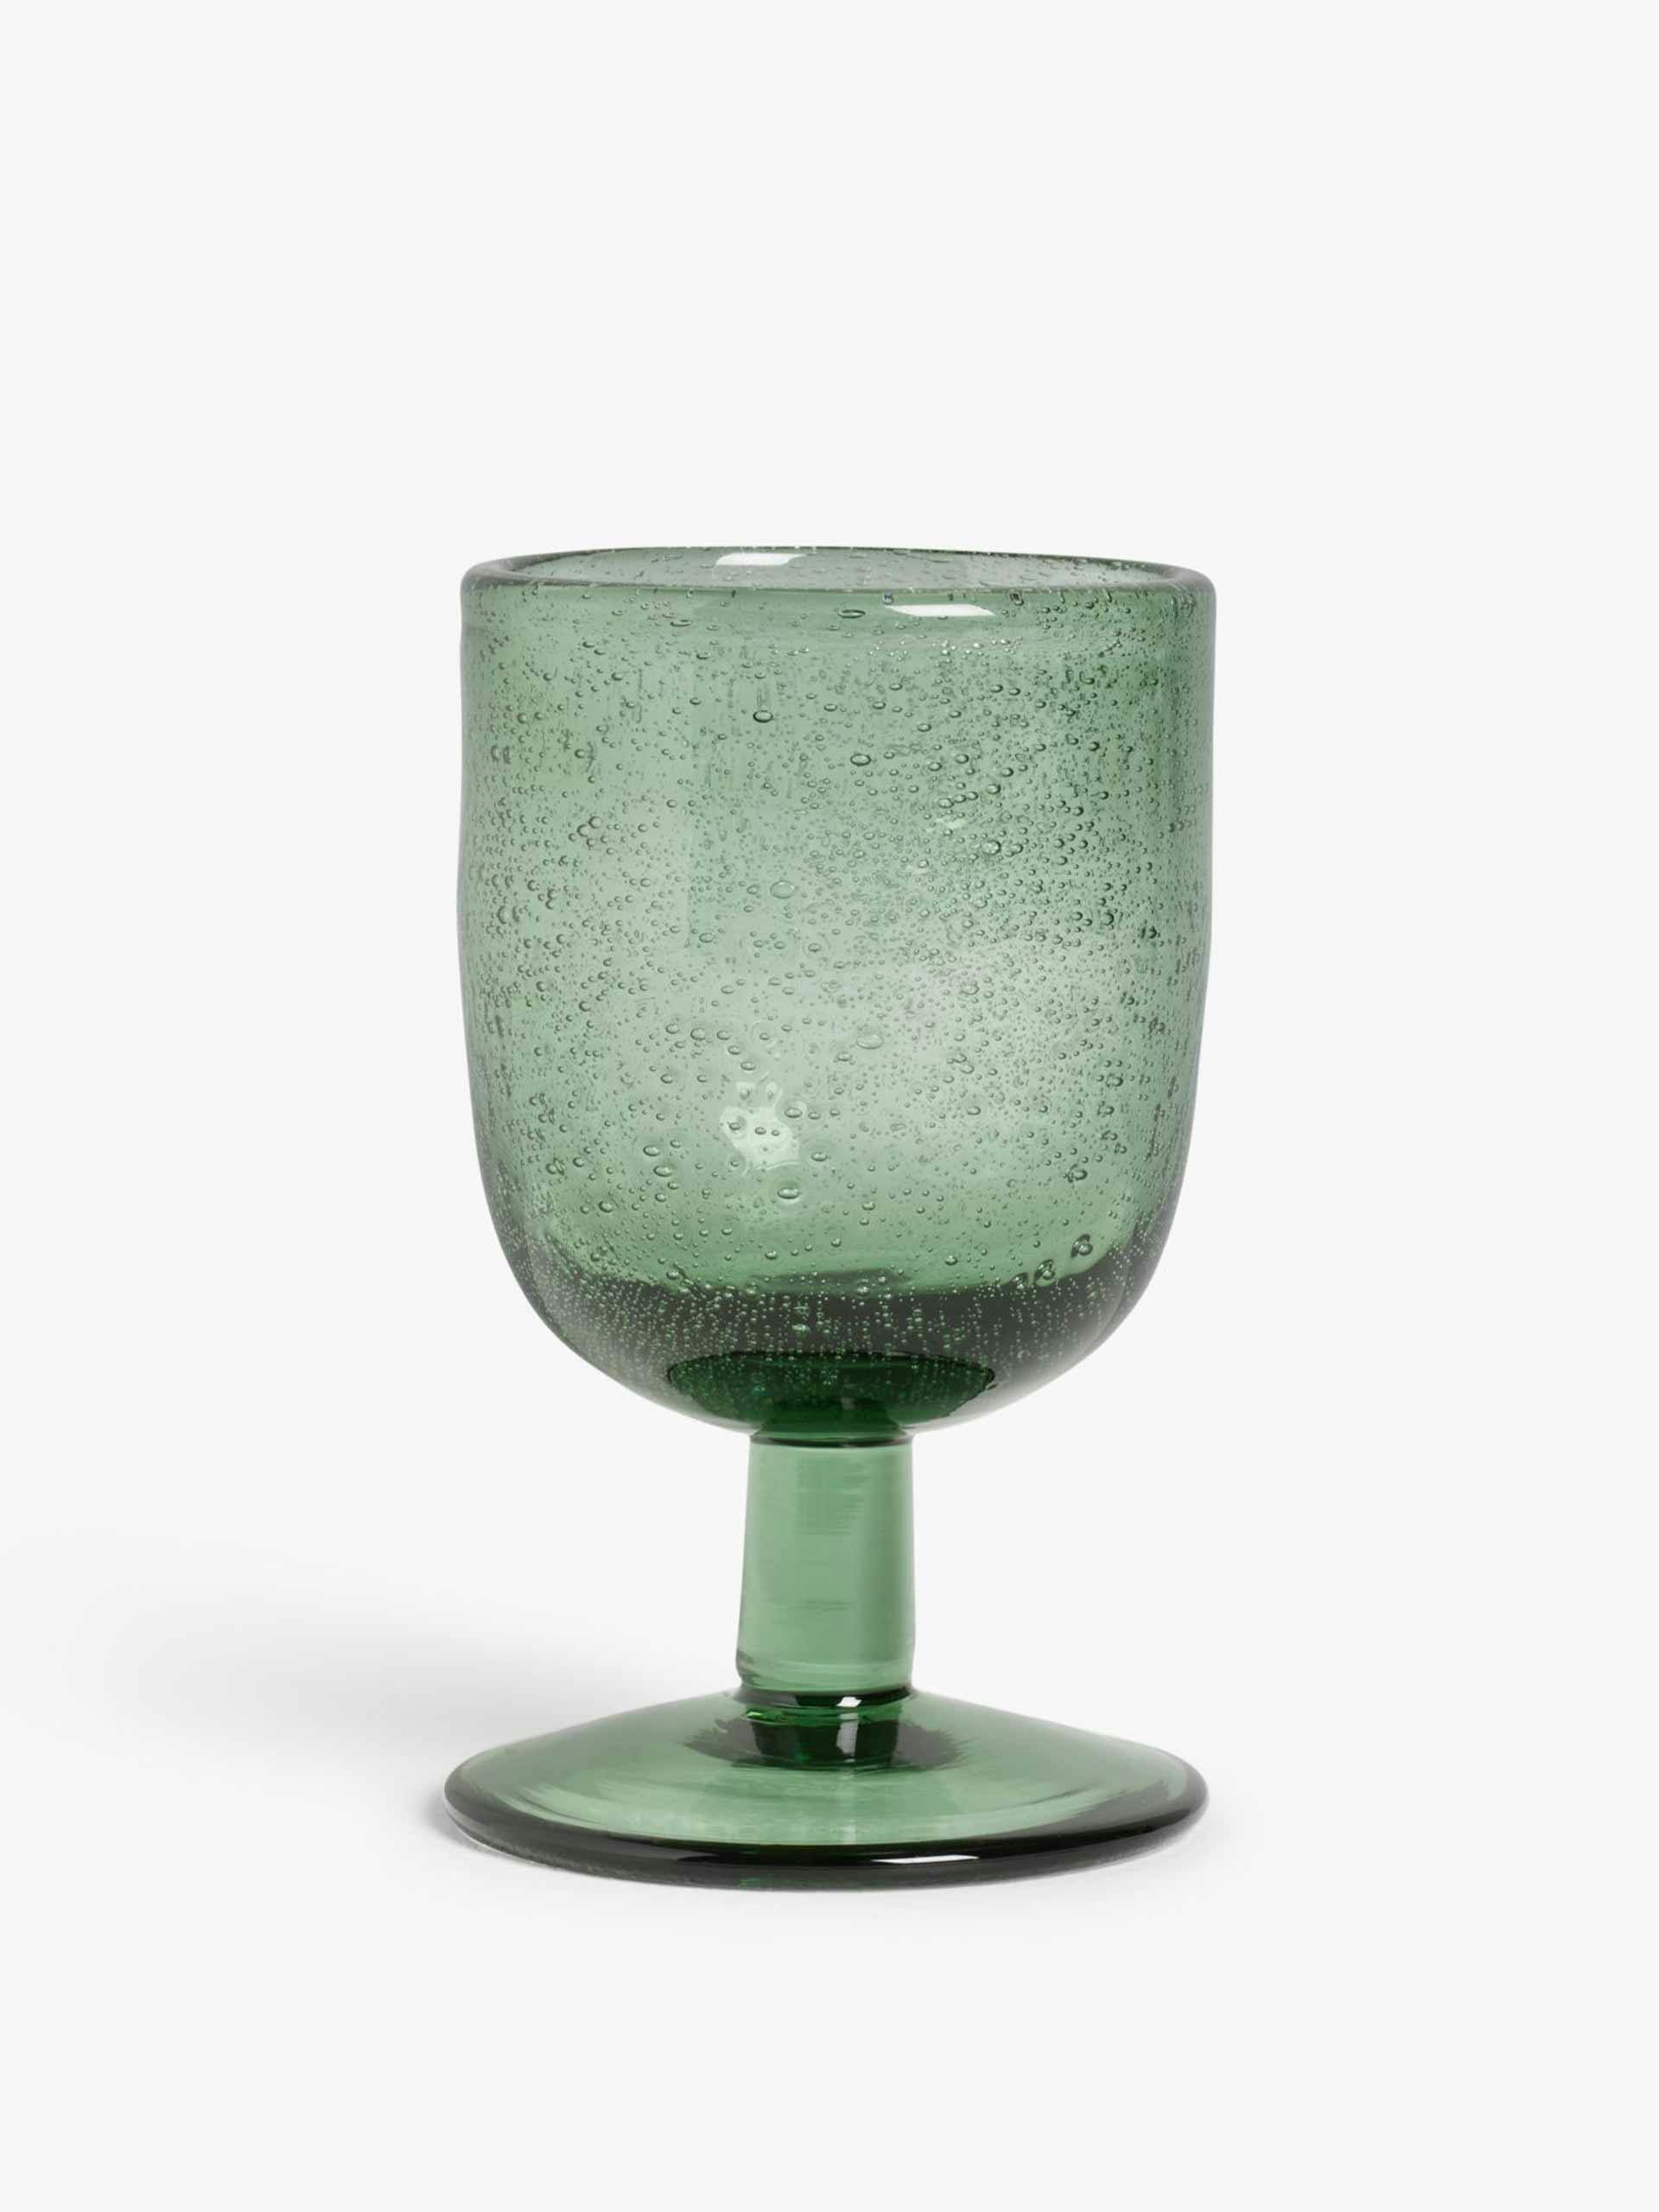 Green wine glass